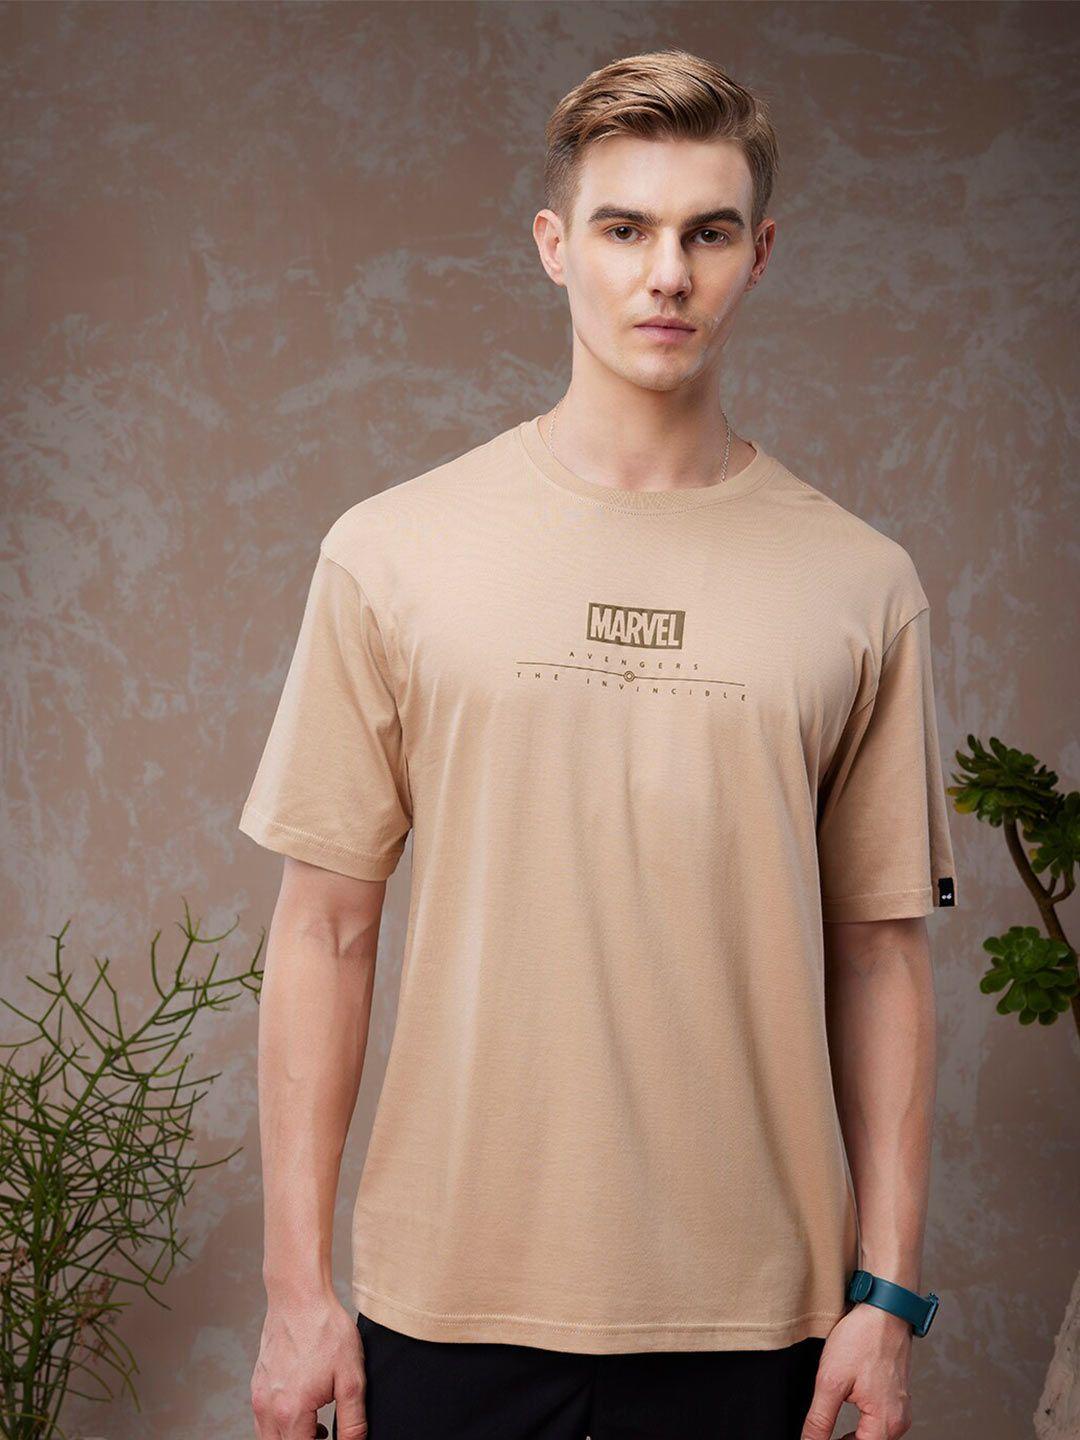 bewakoof typography printed round neck cotton oversized t-shirt